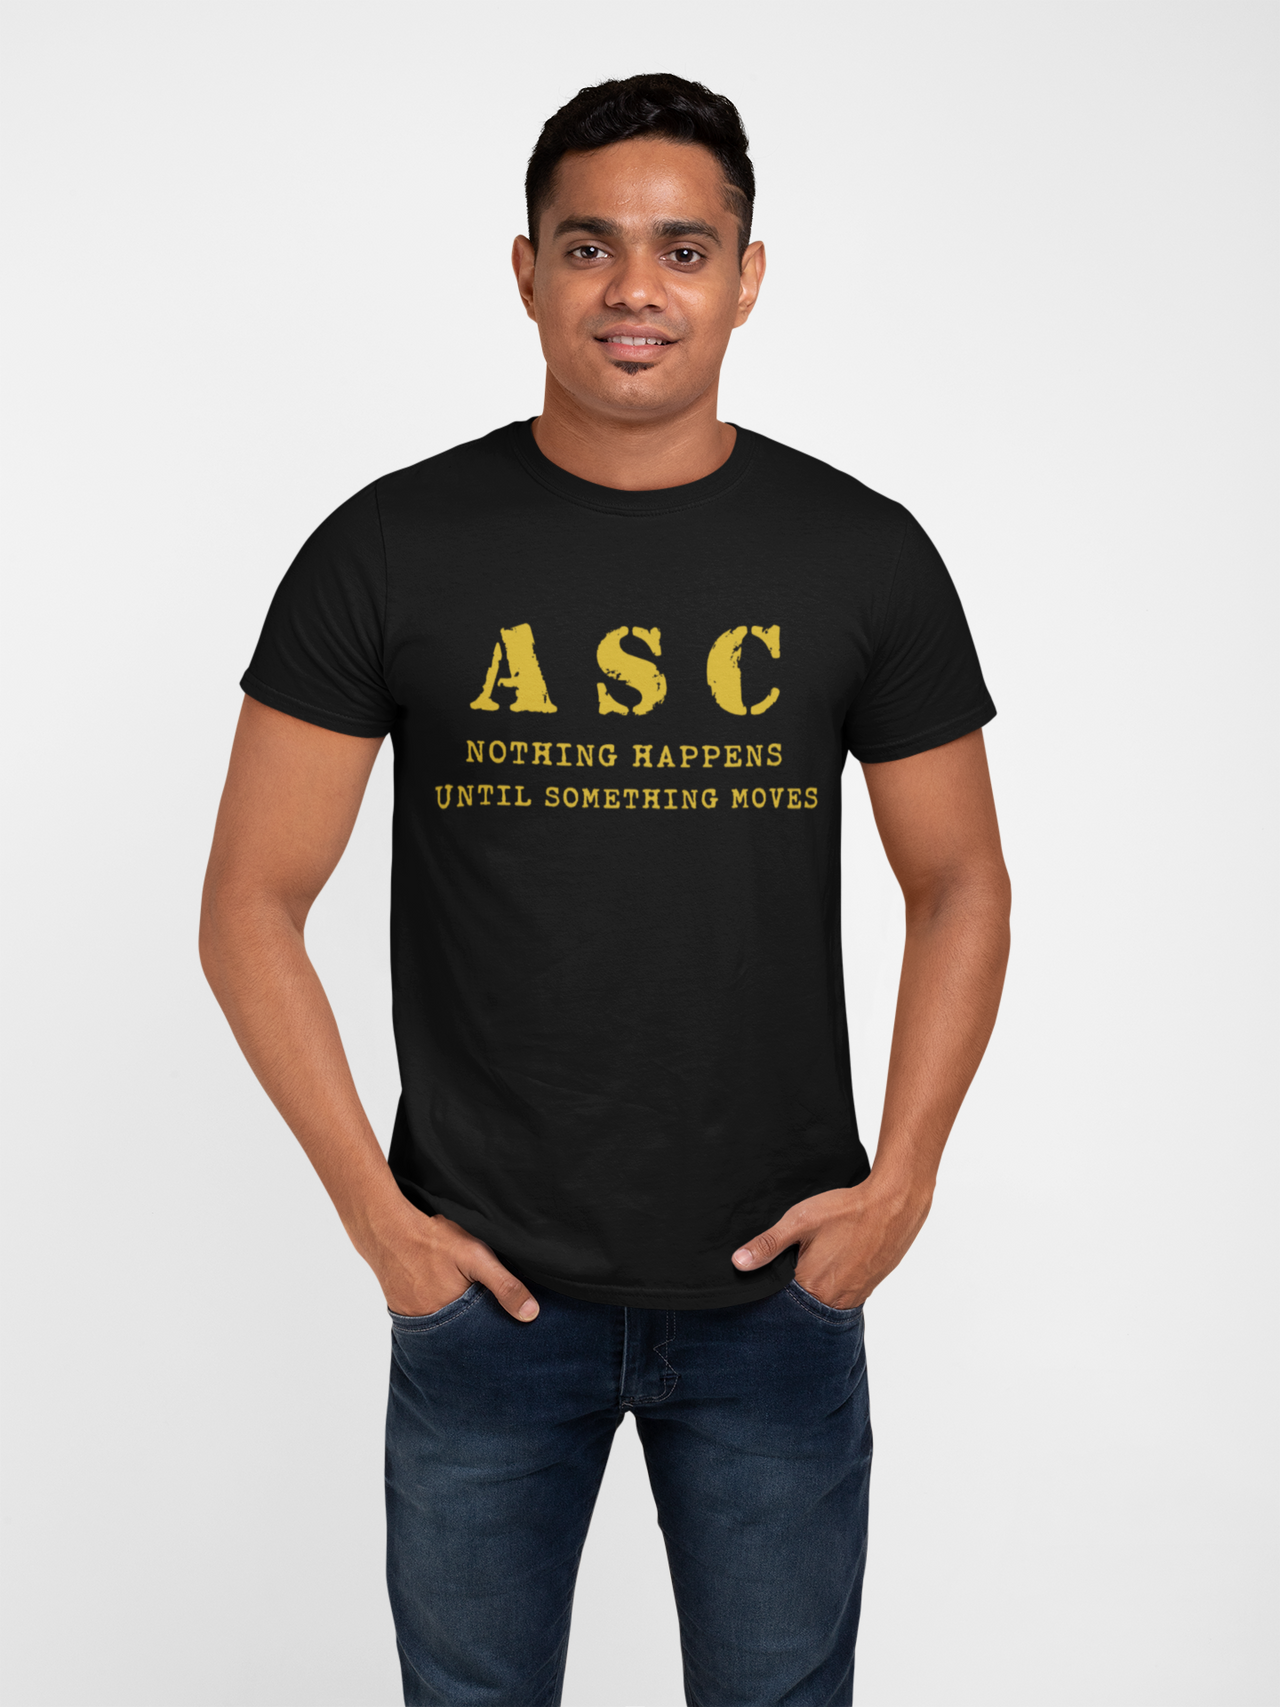 ASC T-shirt - ASC, Nothing Happens Until Something Moves (Men)